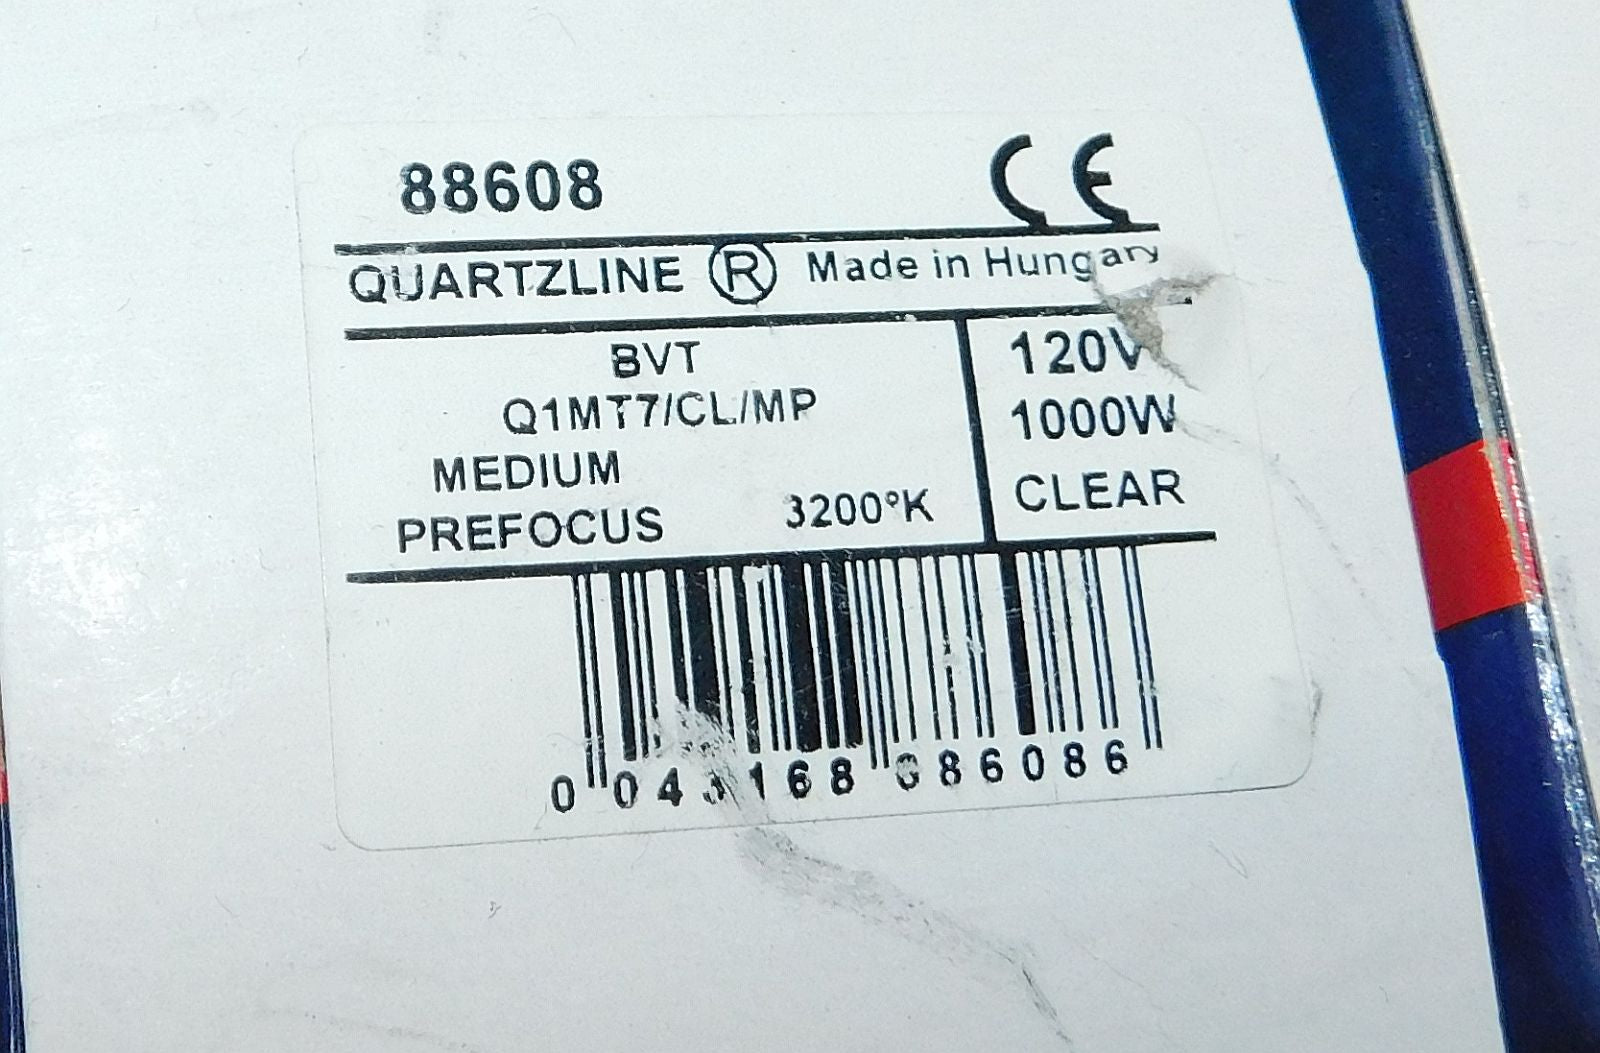 Case of (6) GE Quartzline  88608  BVT-Q1MT7/CL/MP 1000W 120V New